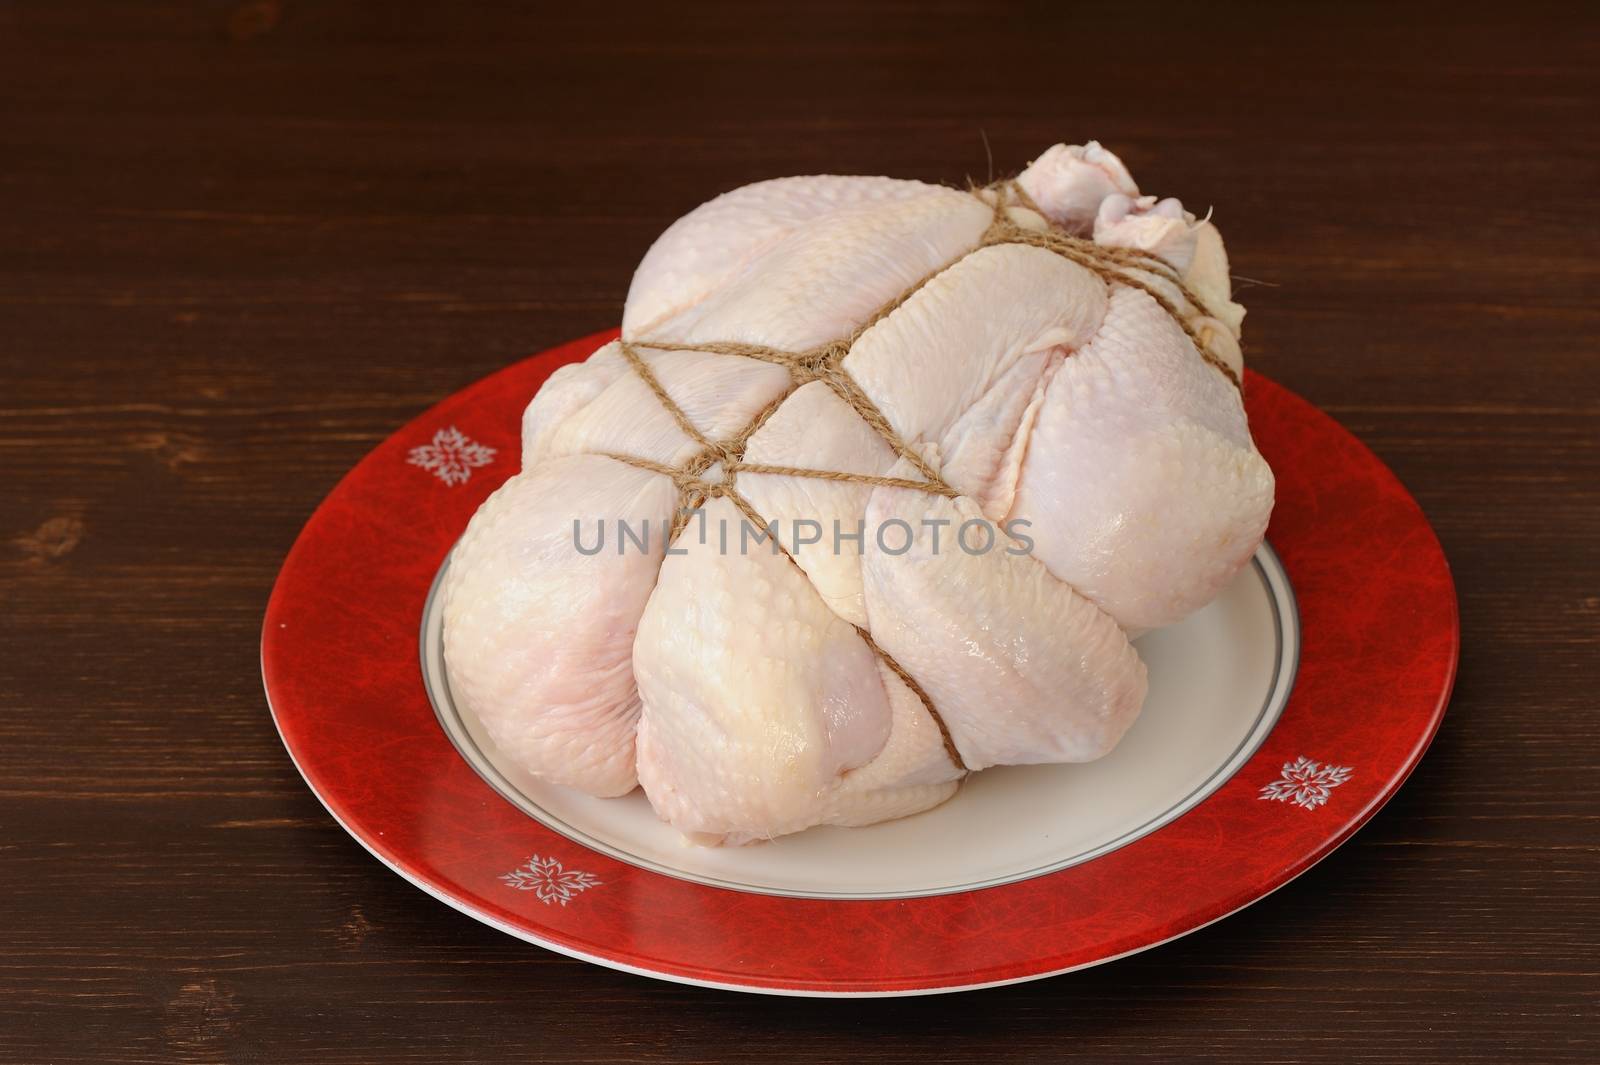 Bondage shibari raw chicken on red boarder plate on dark wood background horizontal